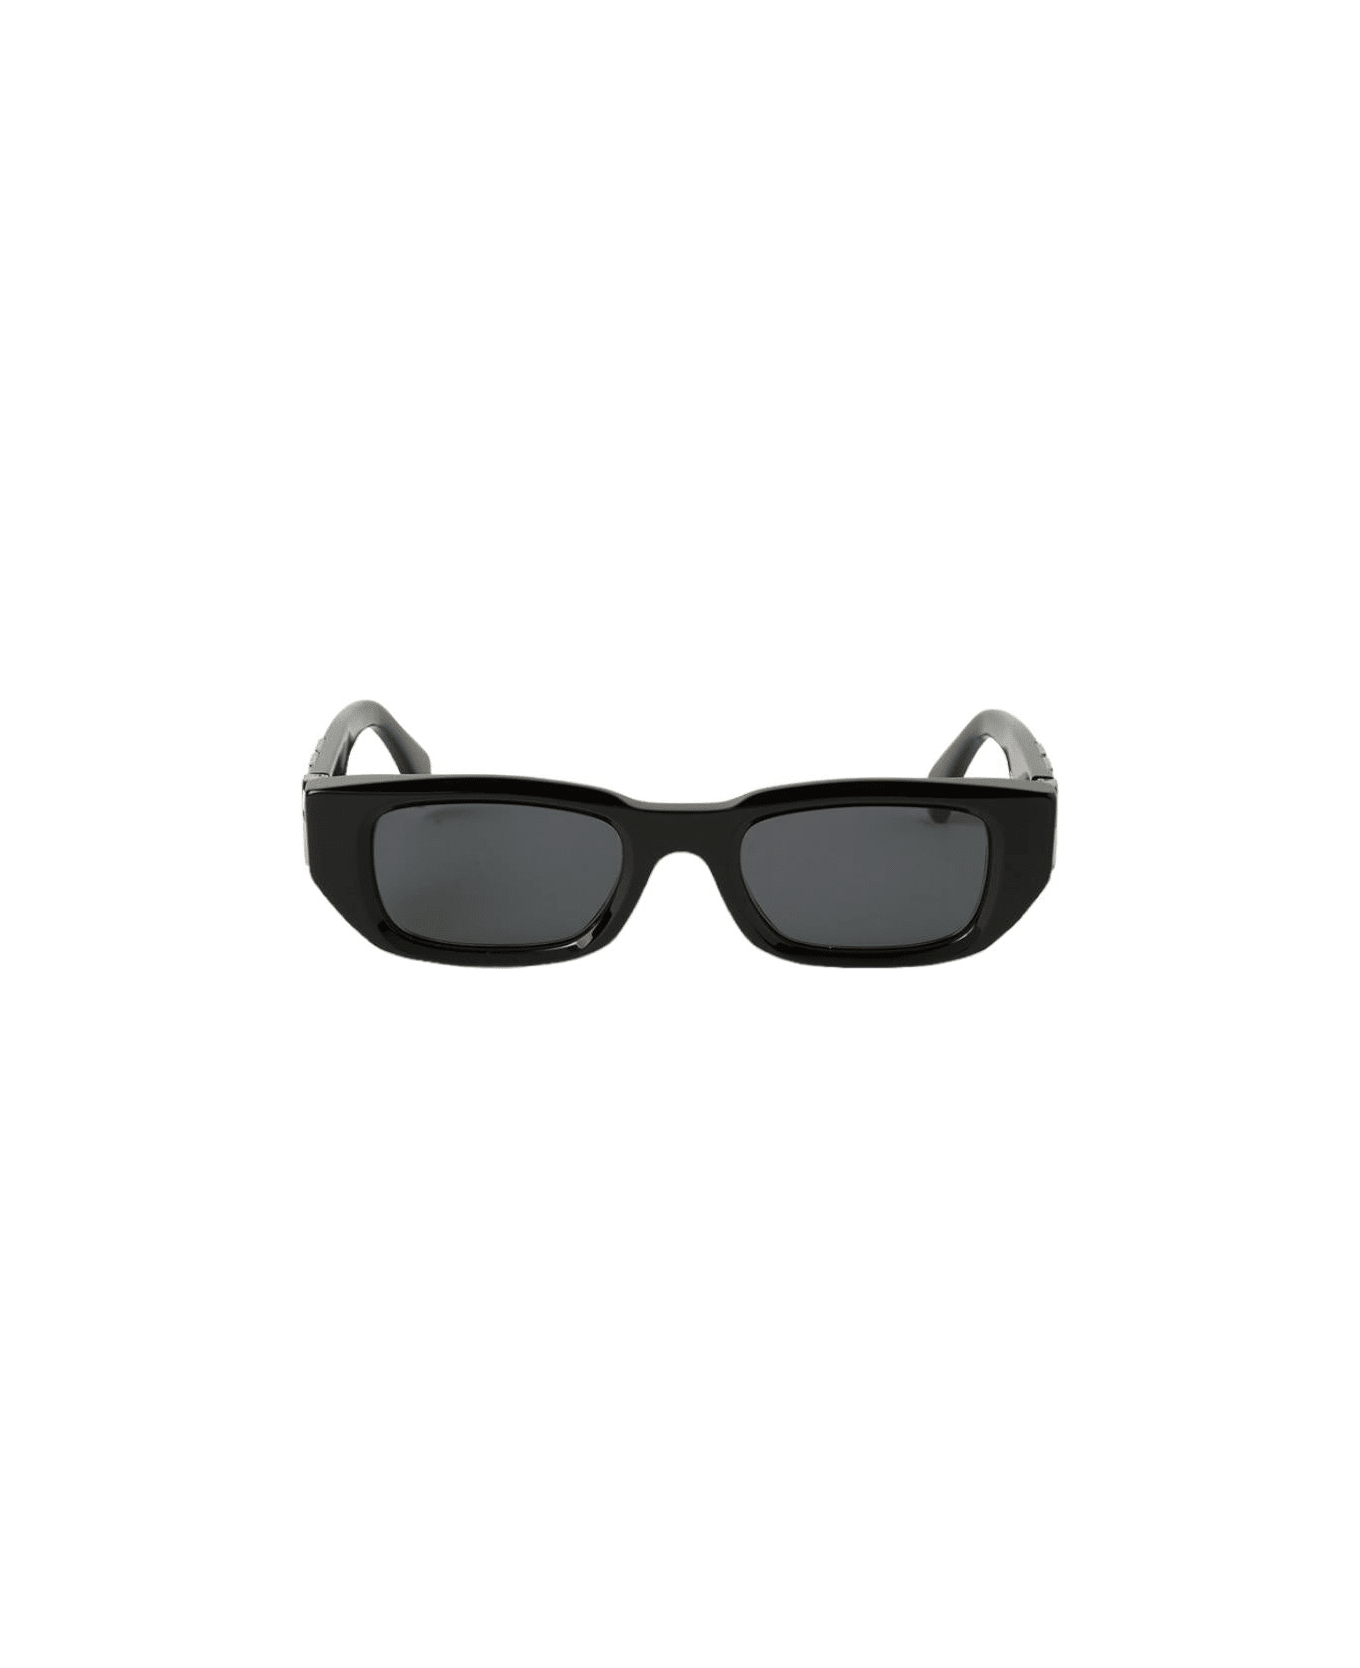 Off-White Fillmore - Oeri124 Sunglasses サングラス